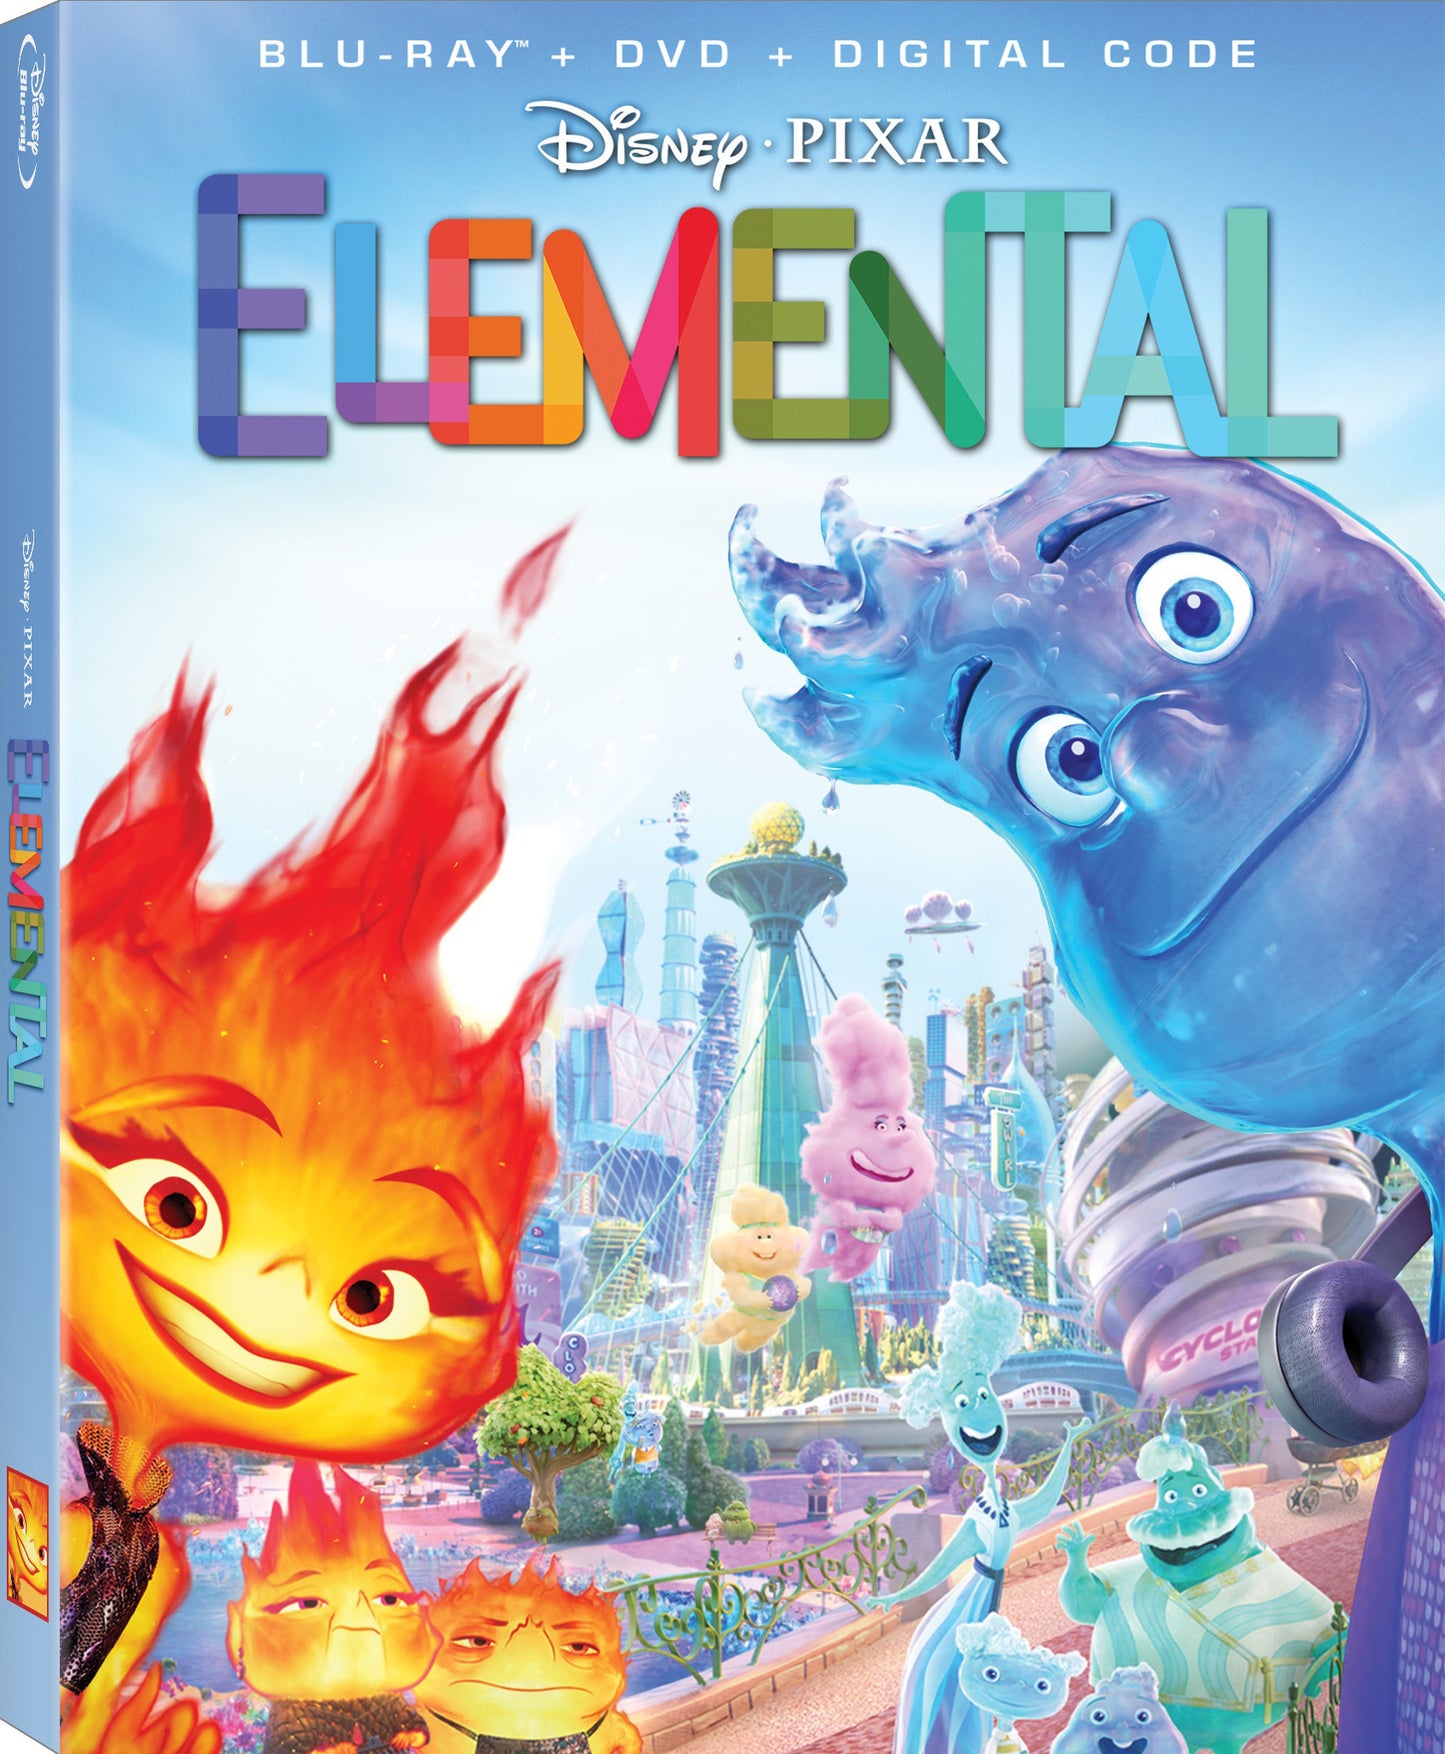 Elemental 4K Blu-ray (Disney Movie Club Exclusive)